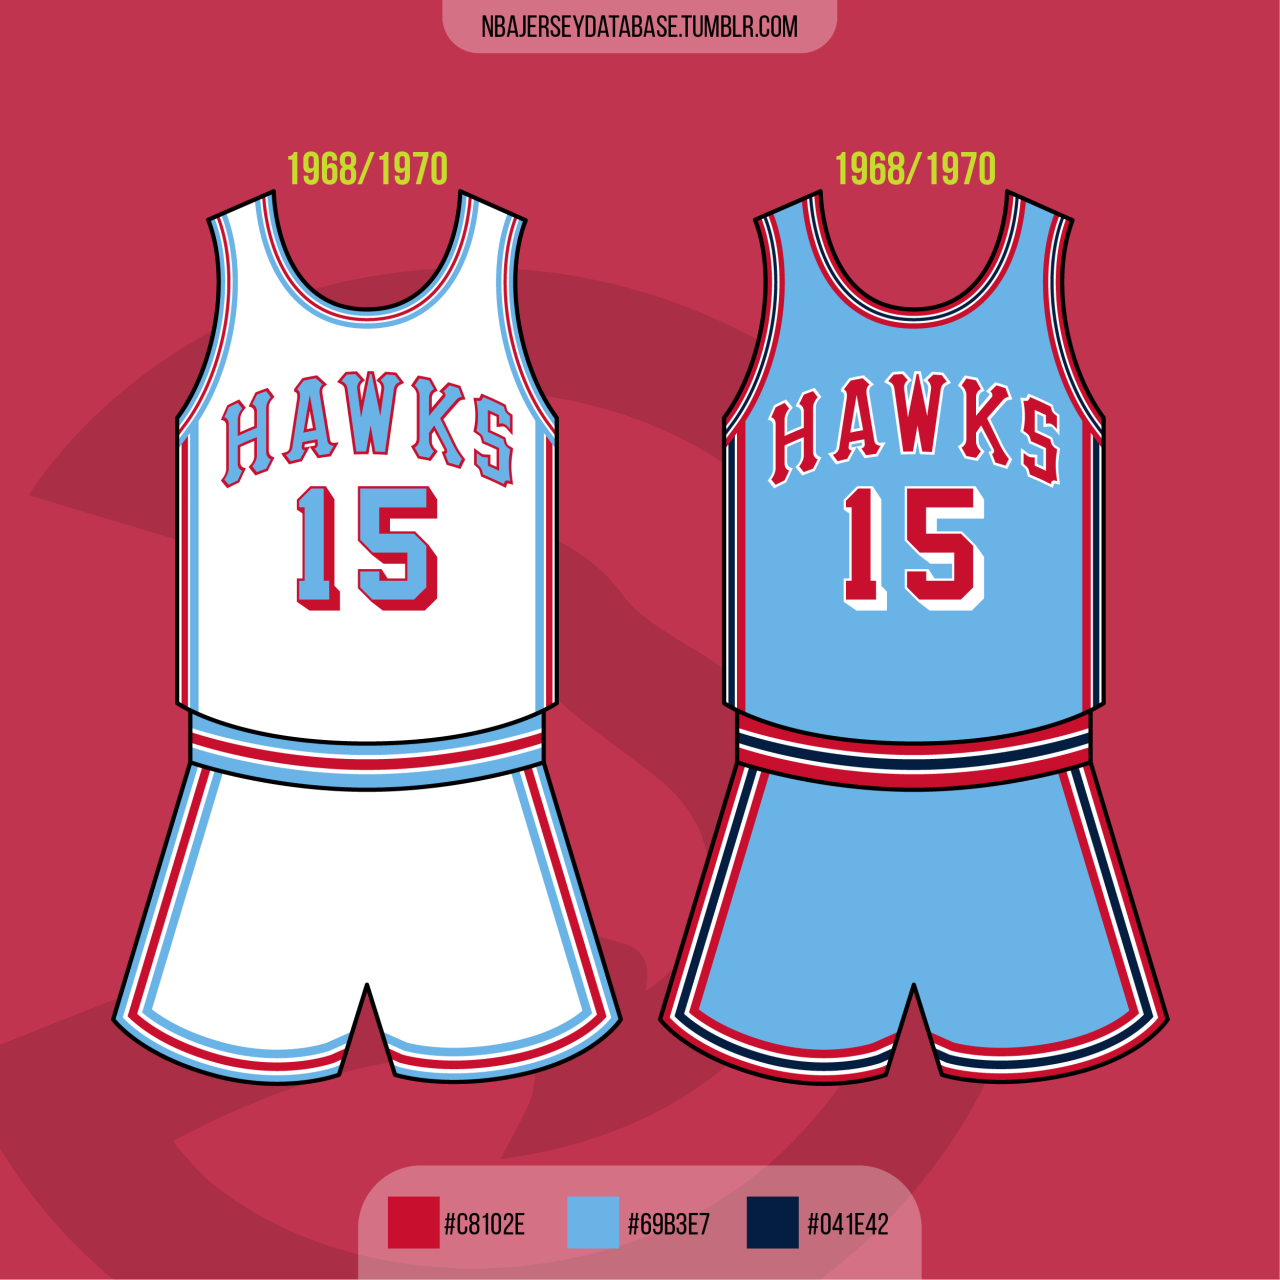 Atlanta Hawks Unveil New Uniforms, Logos, Colours – SportsLogos